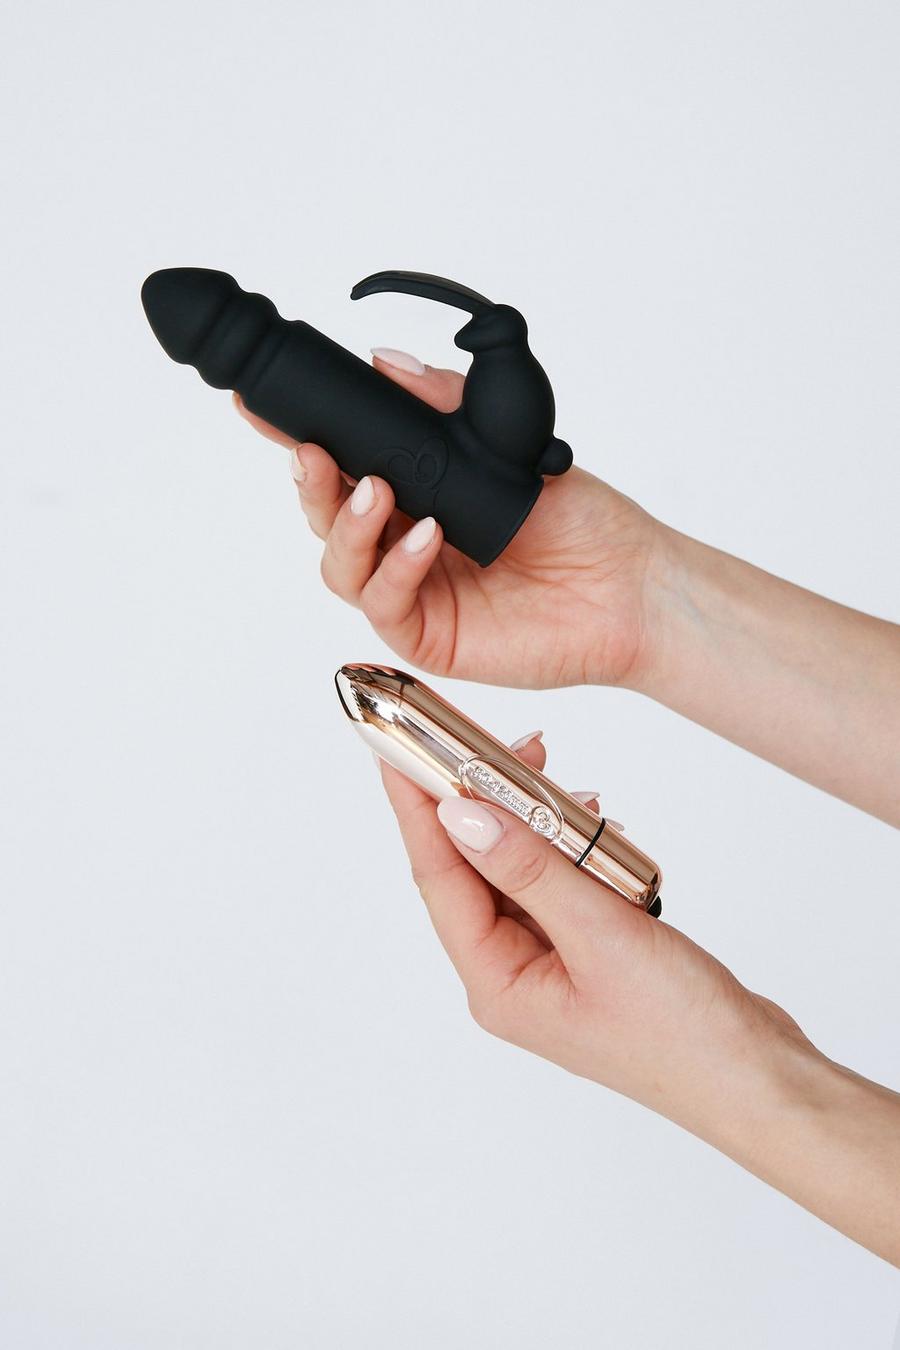 1 Speed Mini Rabbit Bullet Vibrator Sex Toy